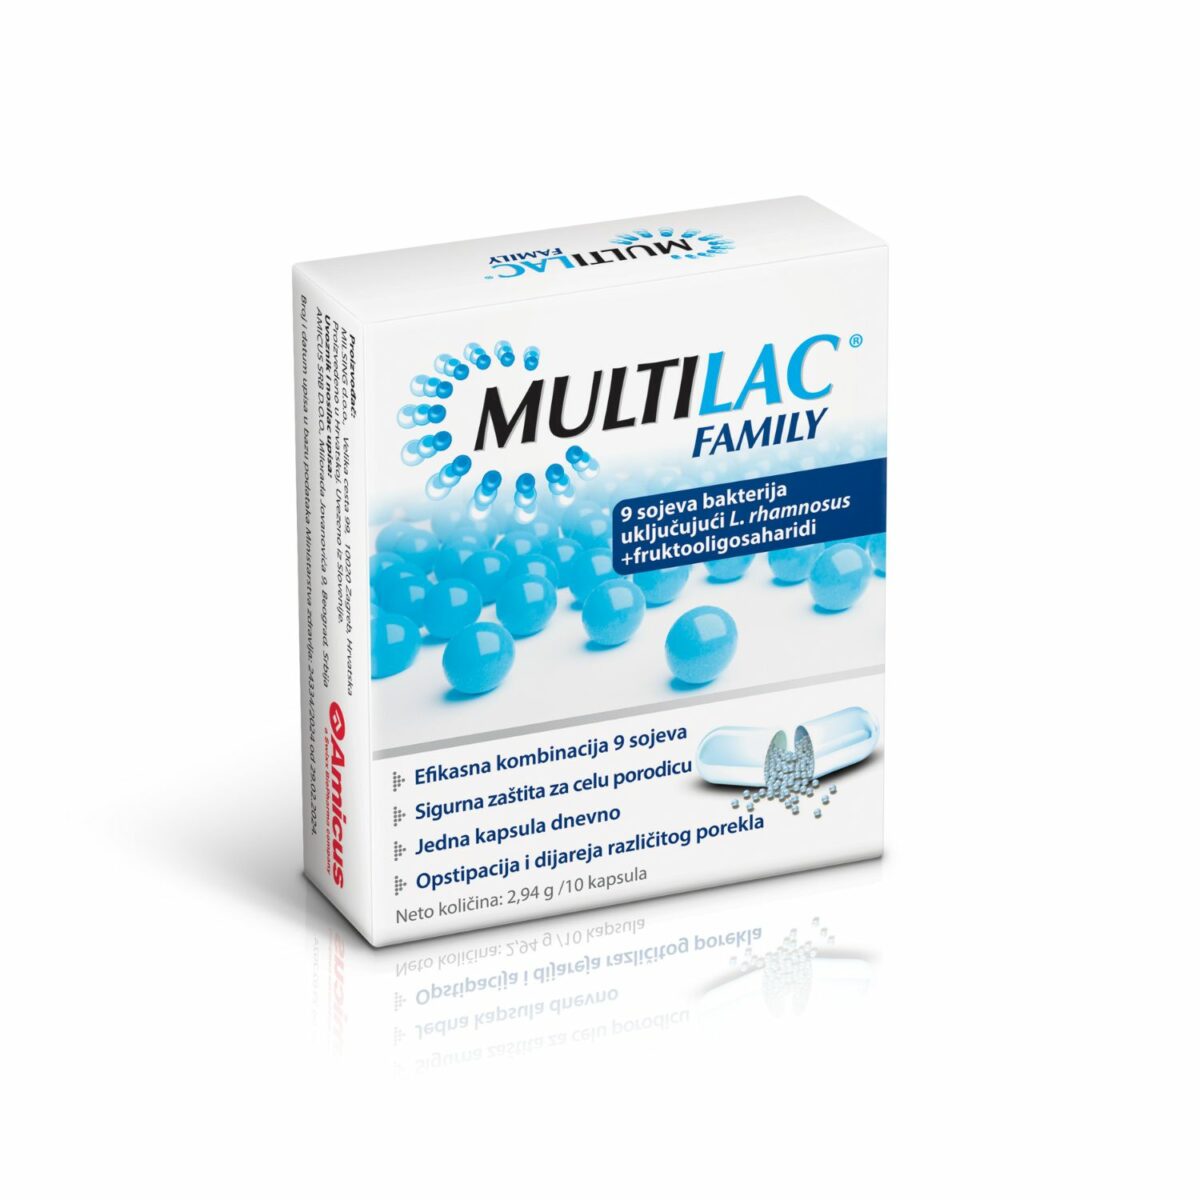 Multilac Family 10 kapsula